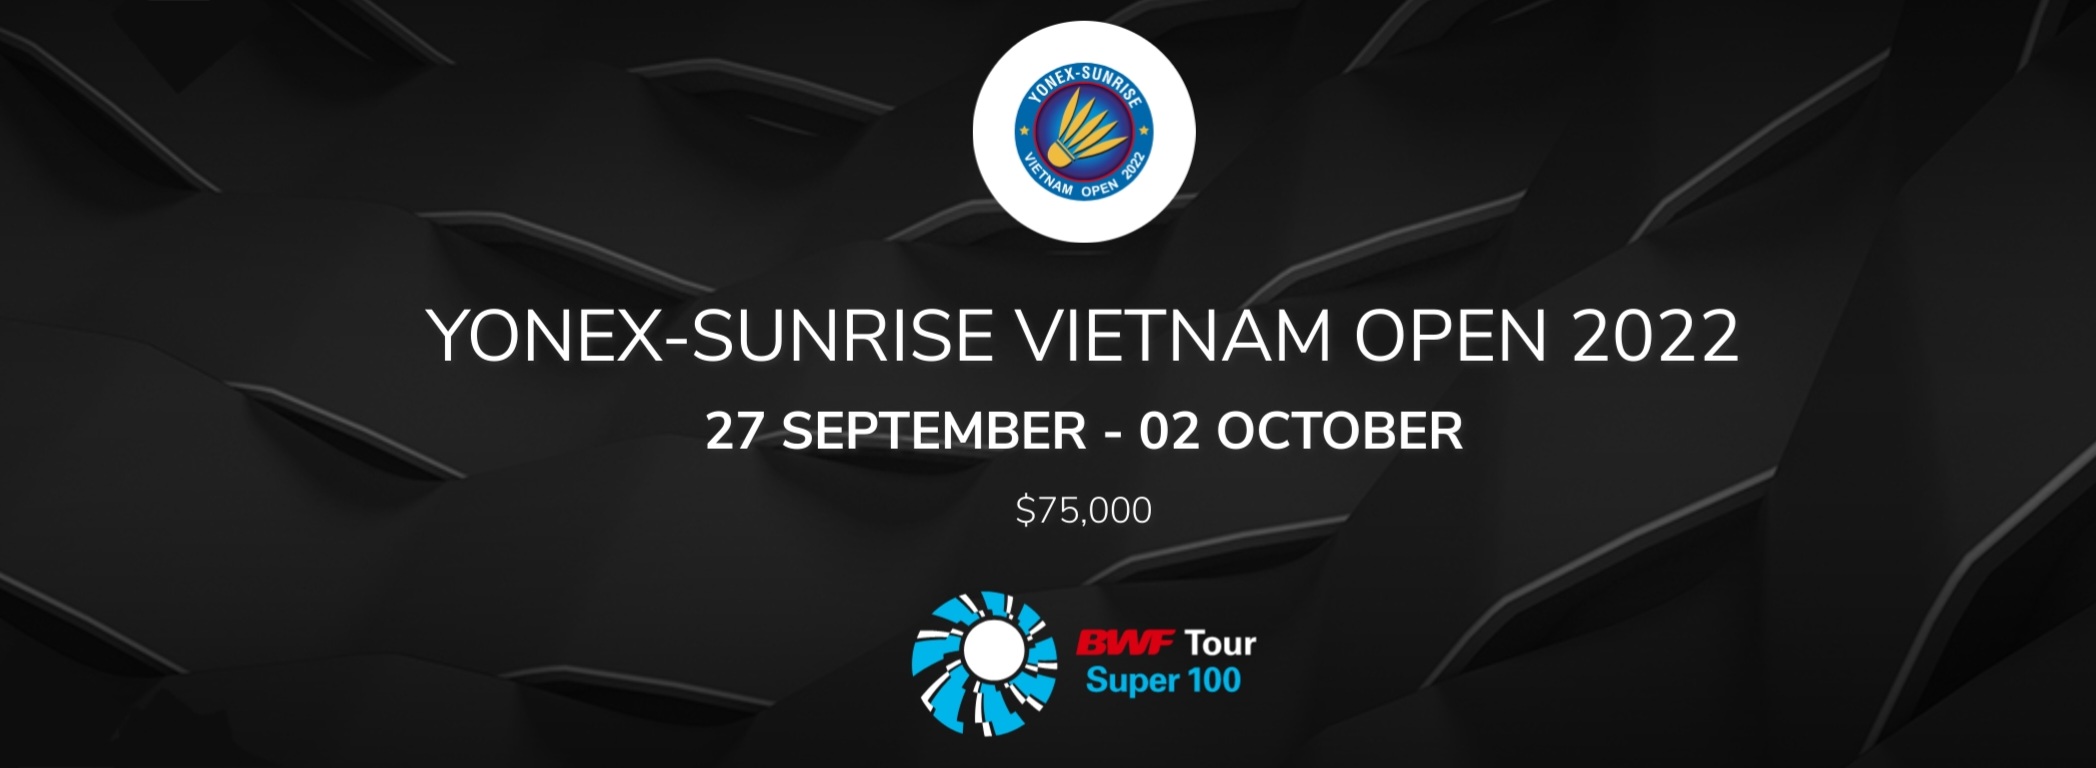 # YONEX-SUNRISE Vietnam Open 2022 Sep 27 to Oct 2